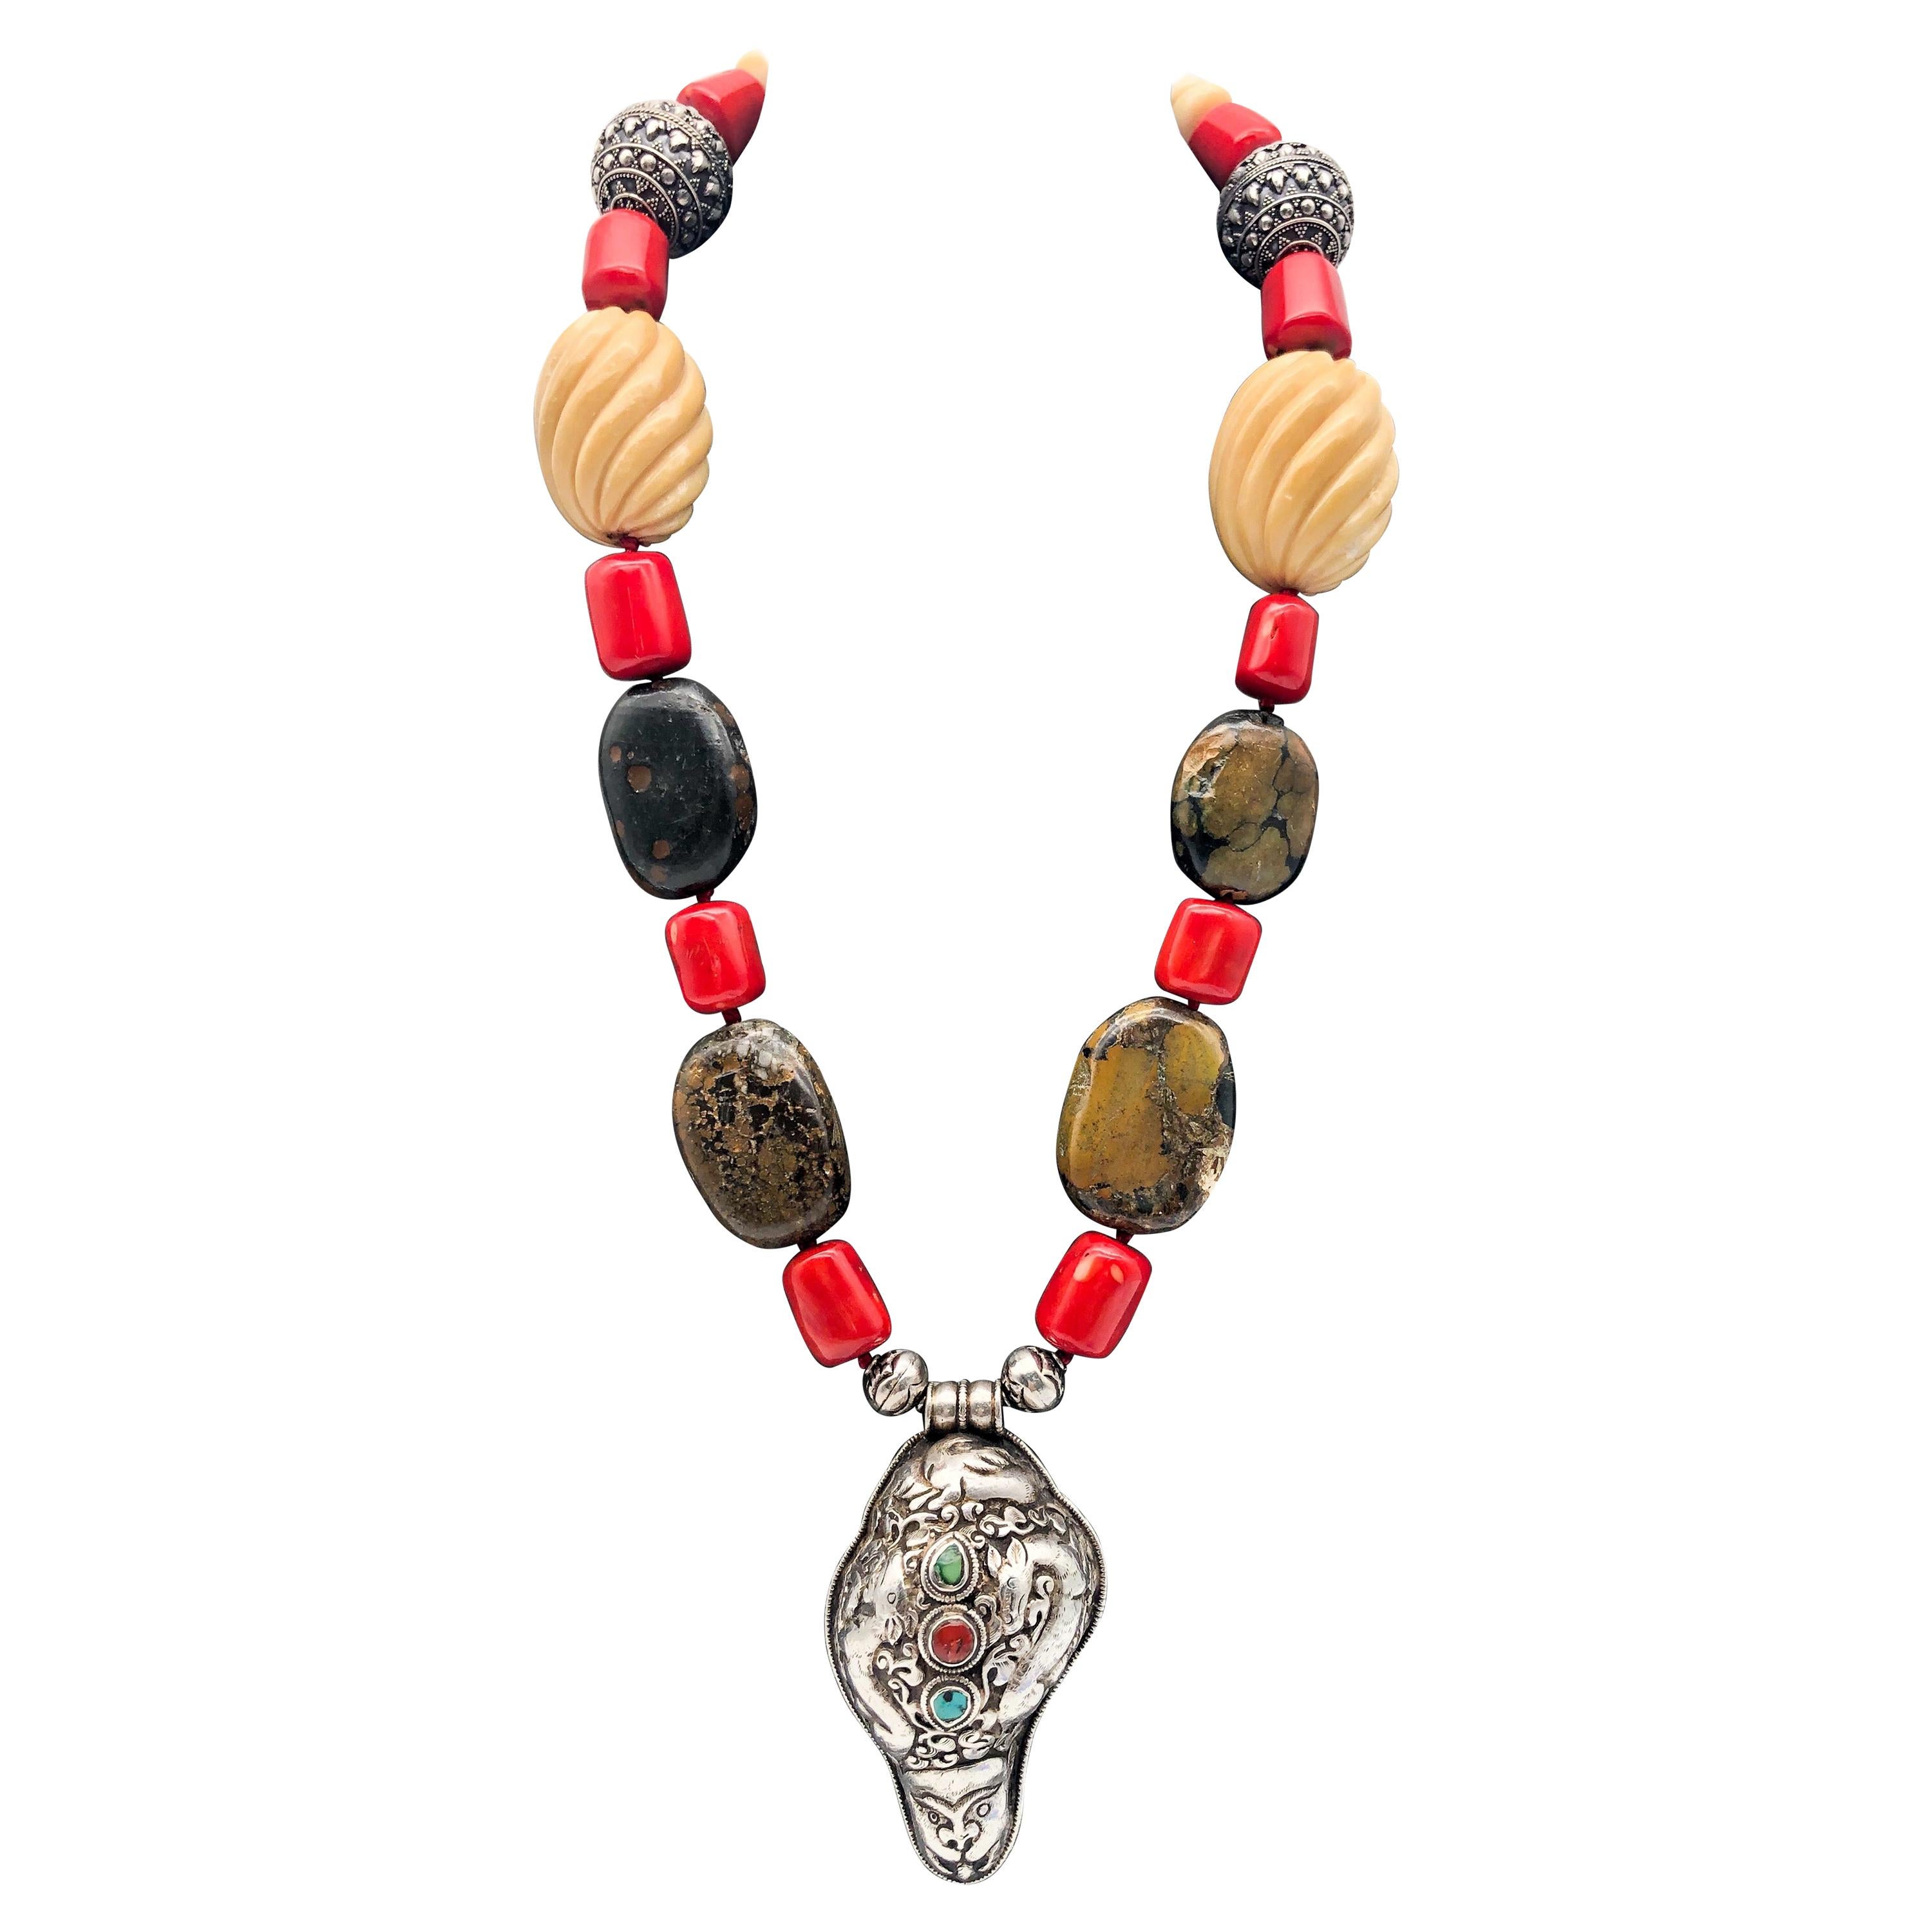 A.Jeschel A super Dramatic and Bold Tibetan pendant long necklace. For Sale